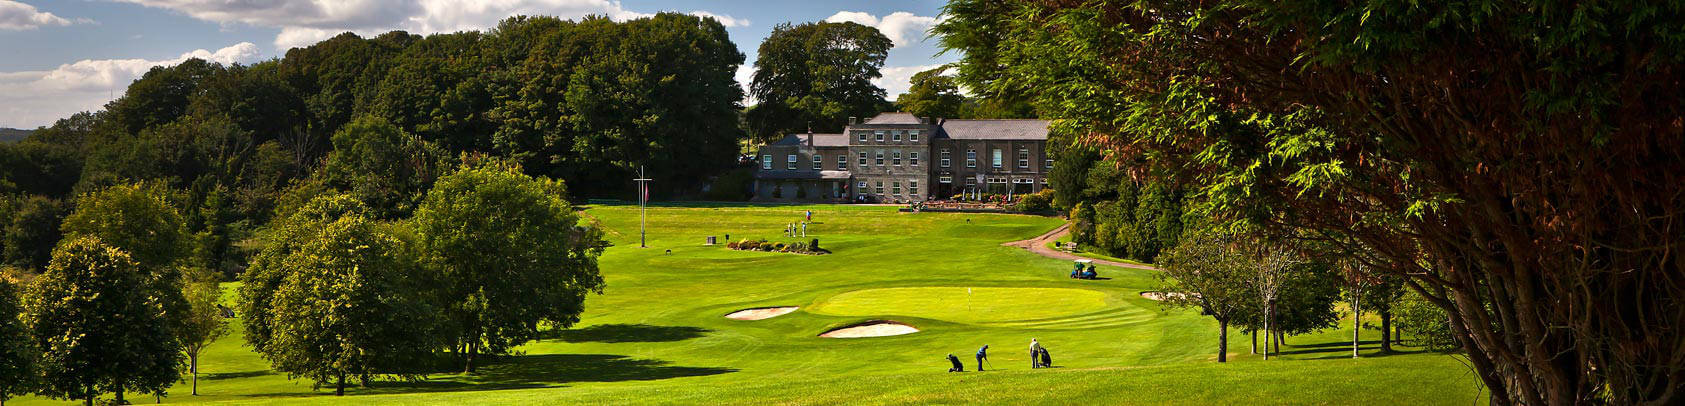 Golf Course in South Wales near Cardiff - Wenvoe Golf Club